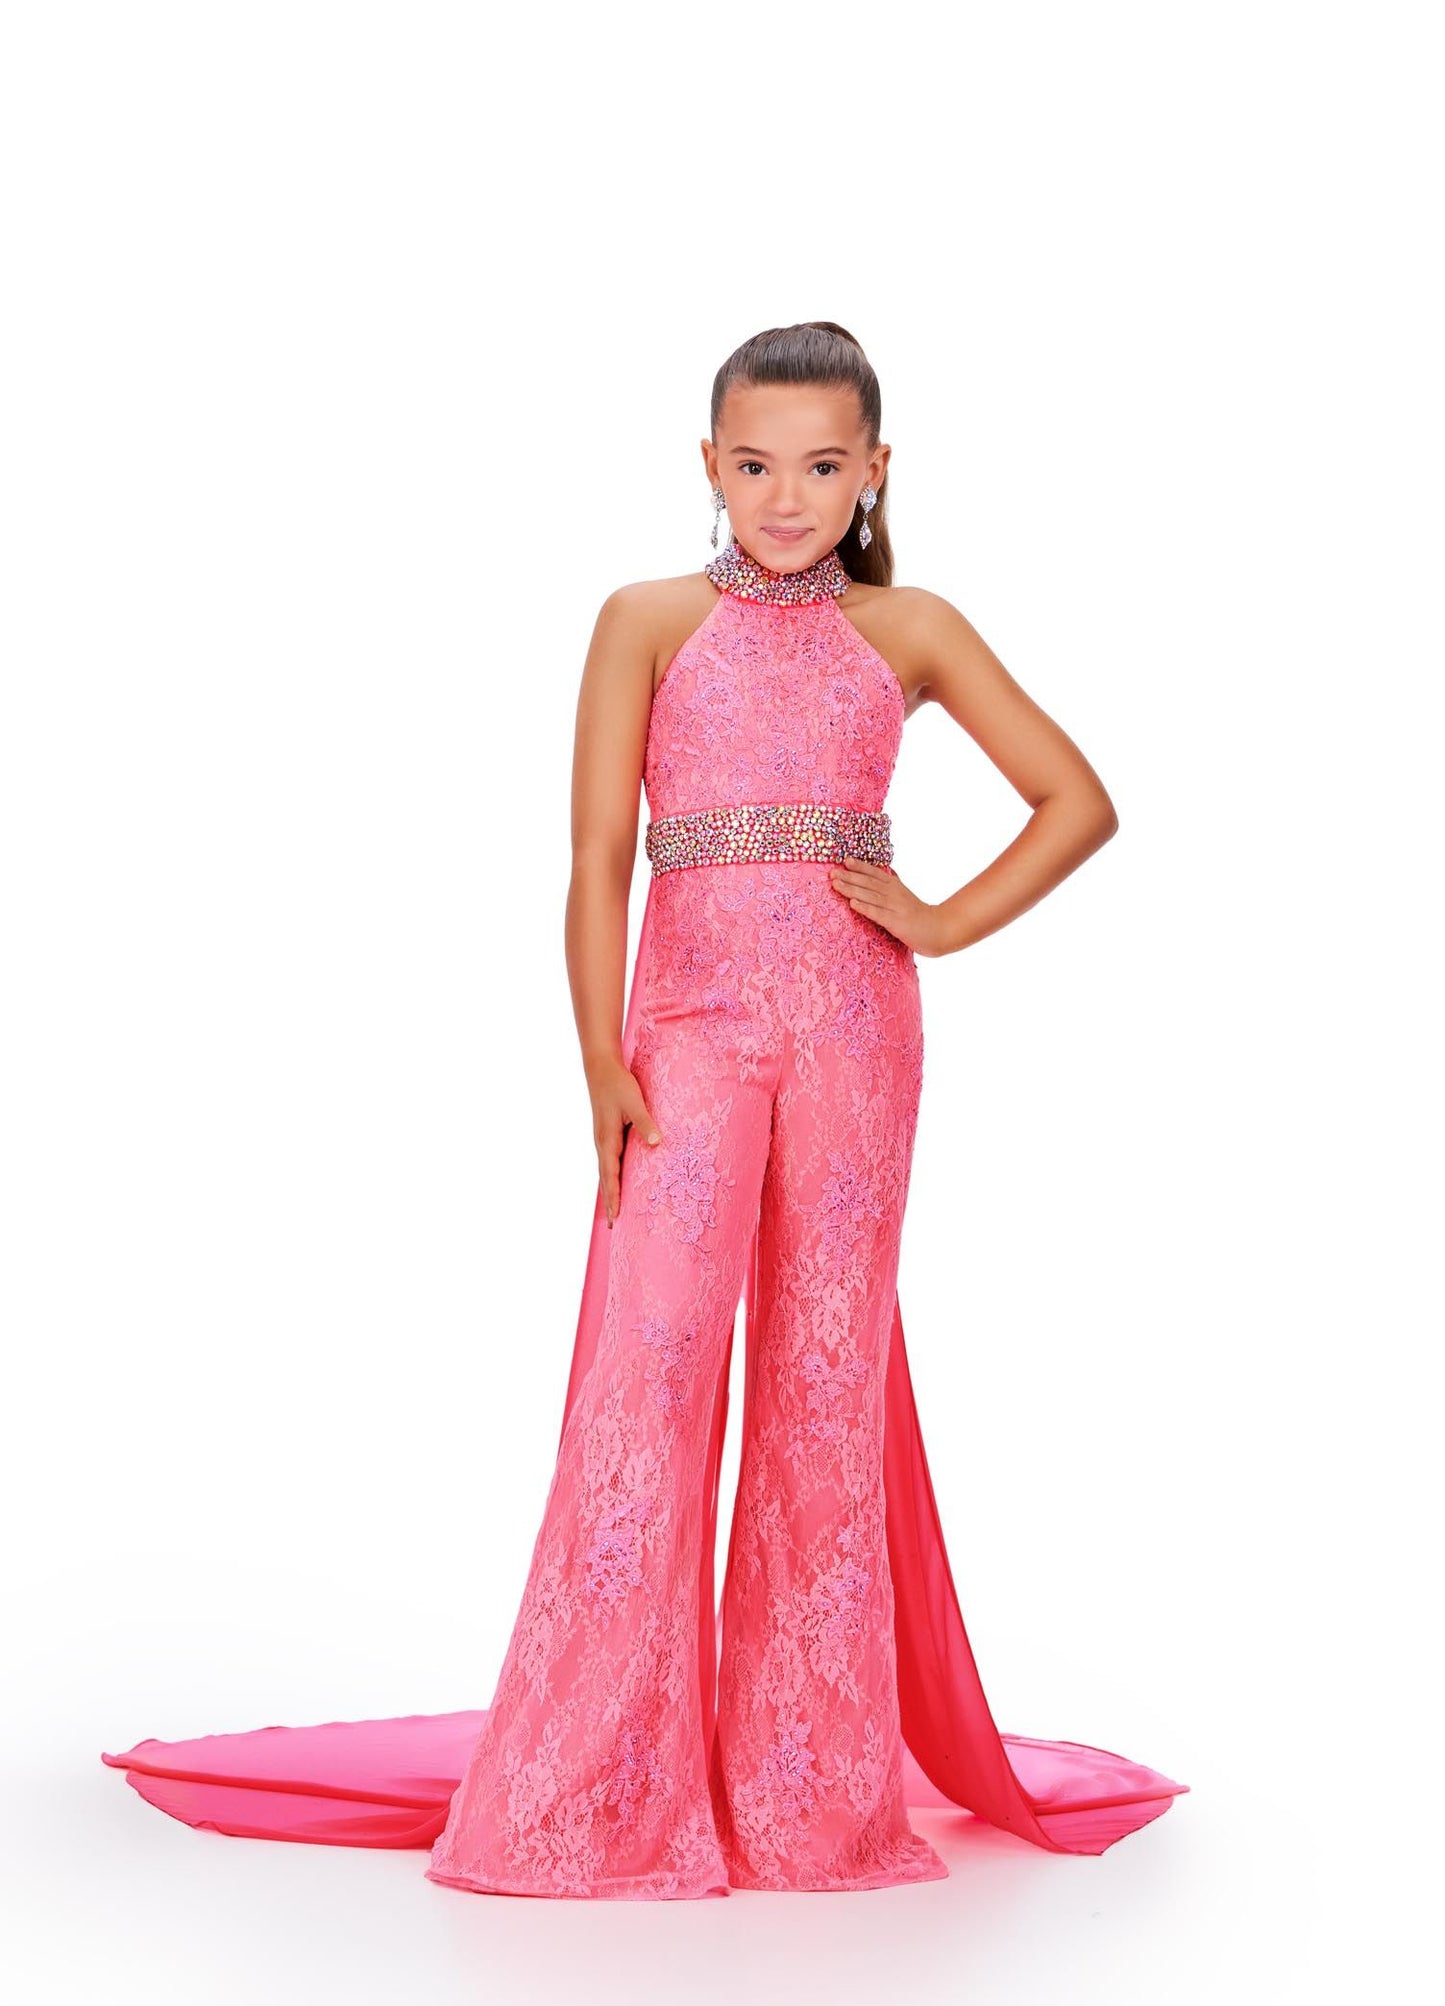 Ashley Lauren Kids 8225 Girls hot pink Lace Crystal Jumpsuit Cape Bell Bottom Pageant Fun Fashion Wear 